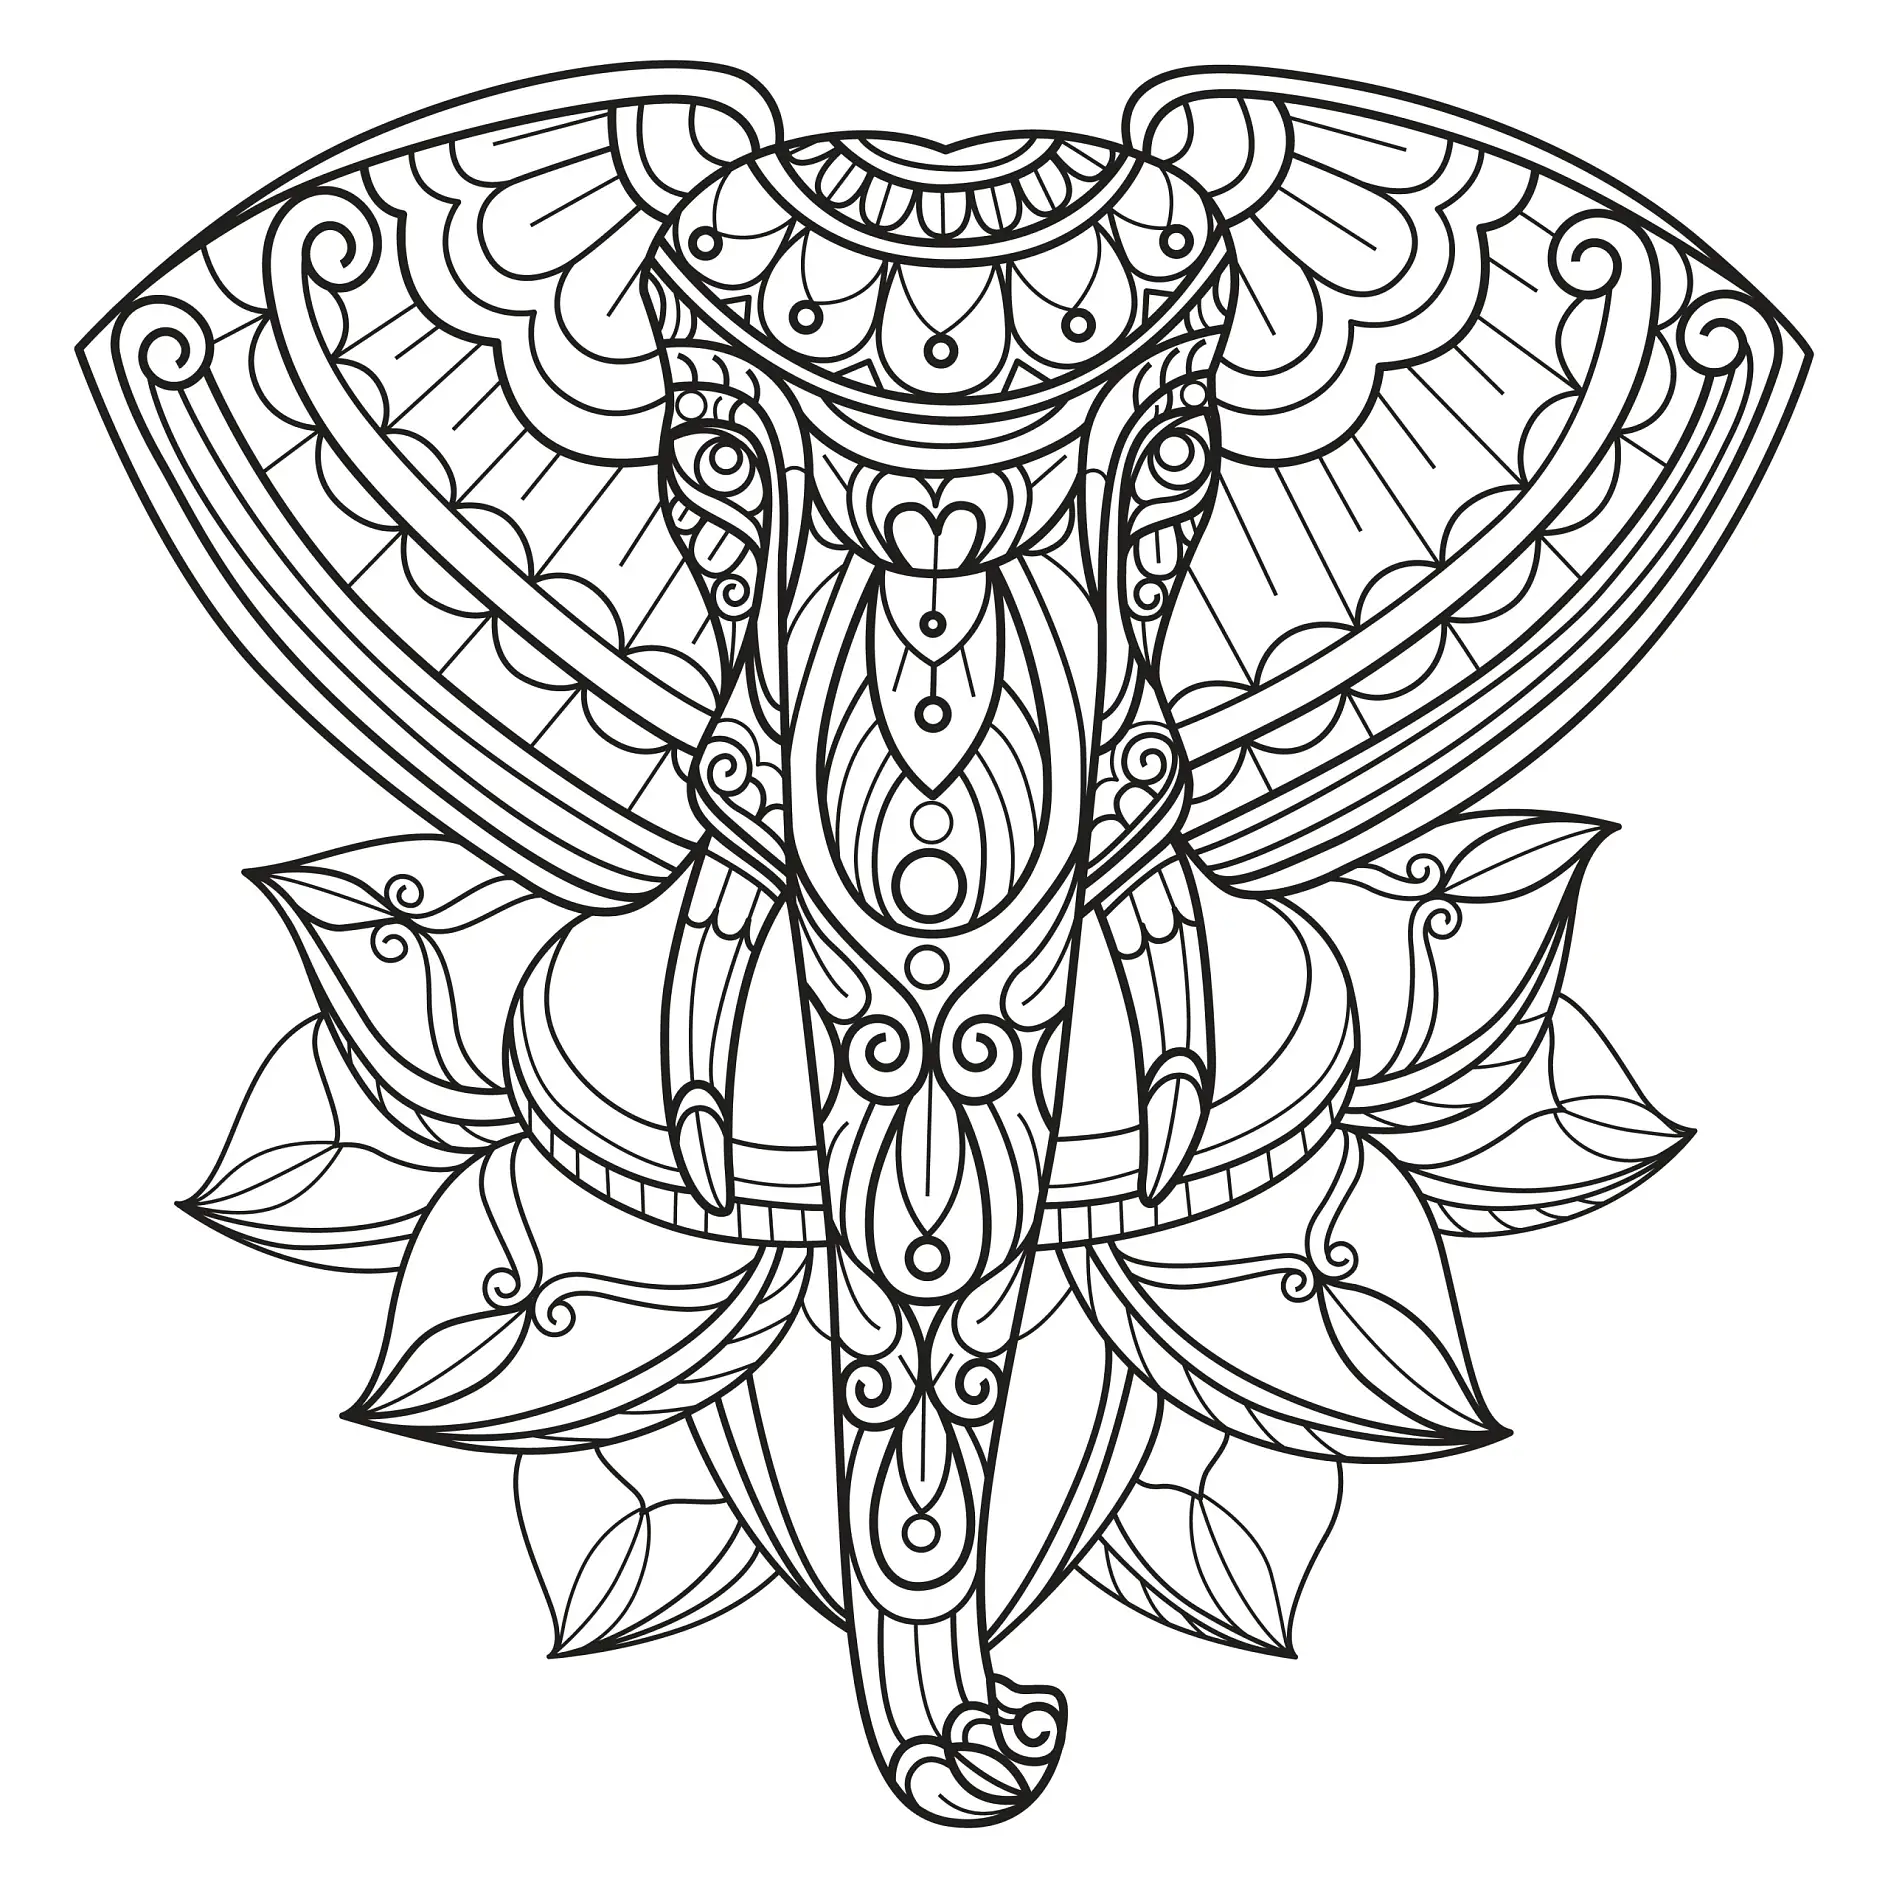 Ausmalbild Mandala Elefant mit dekorativem Muster